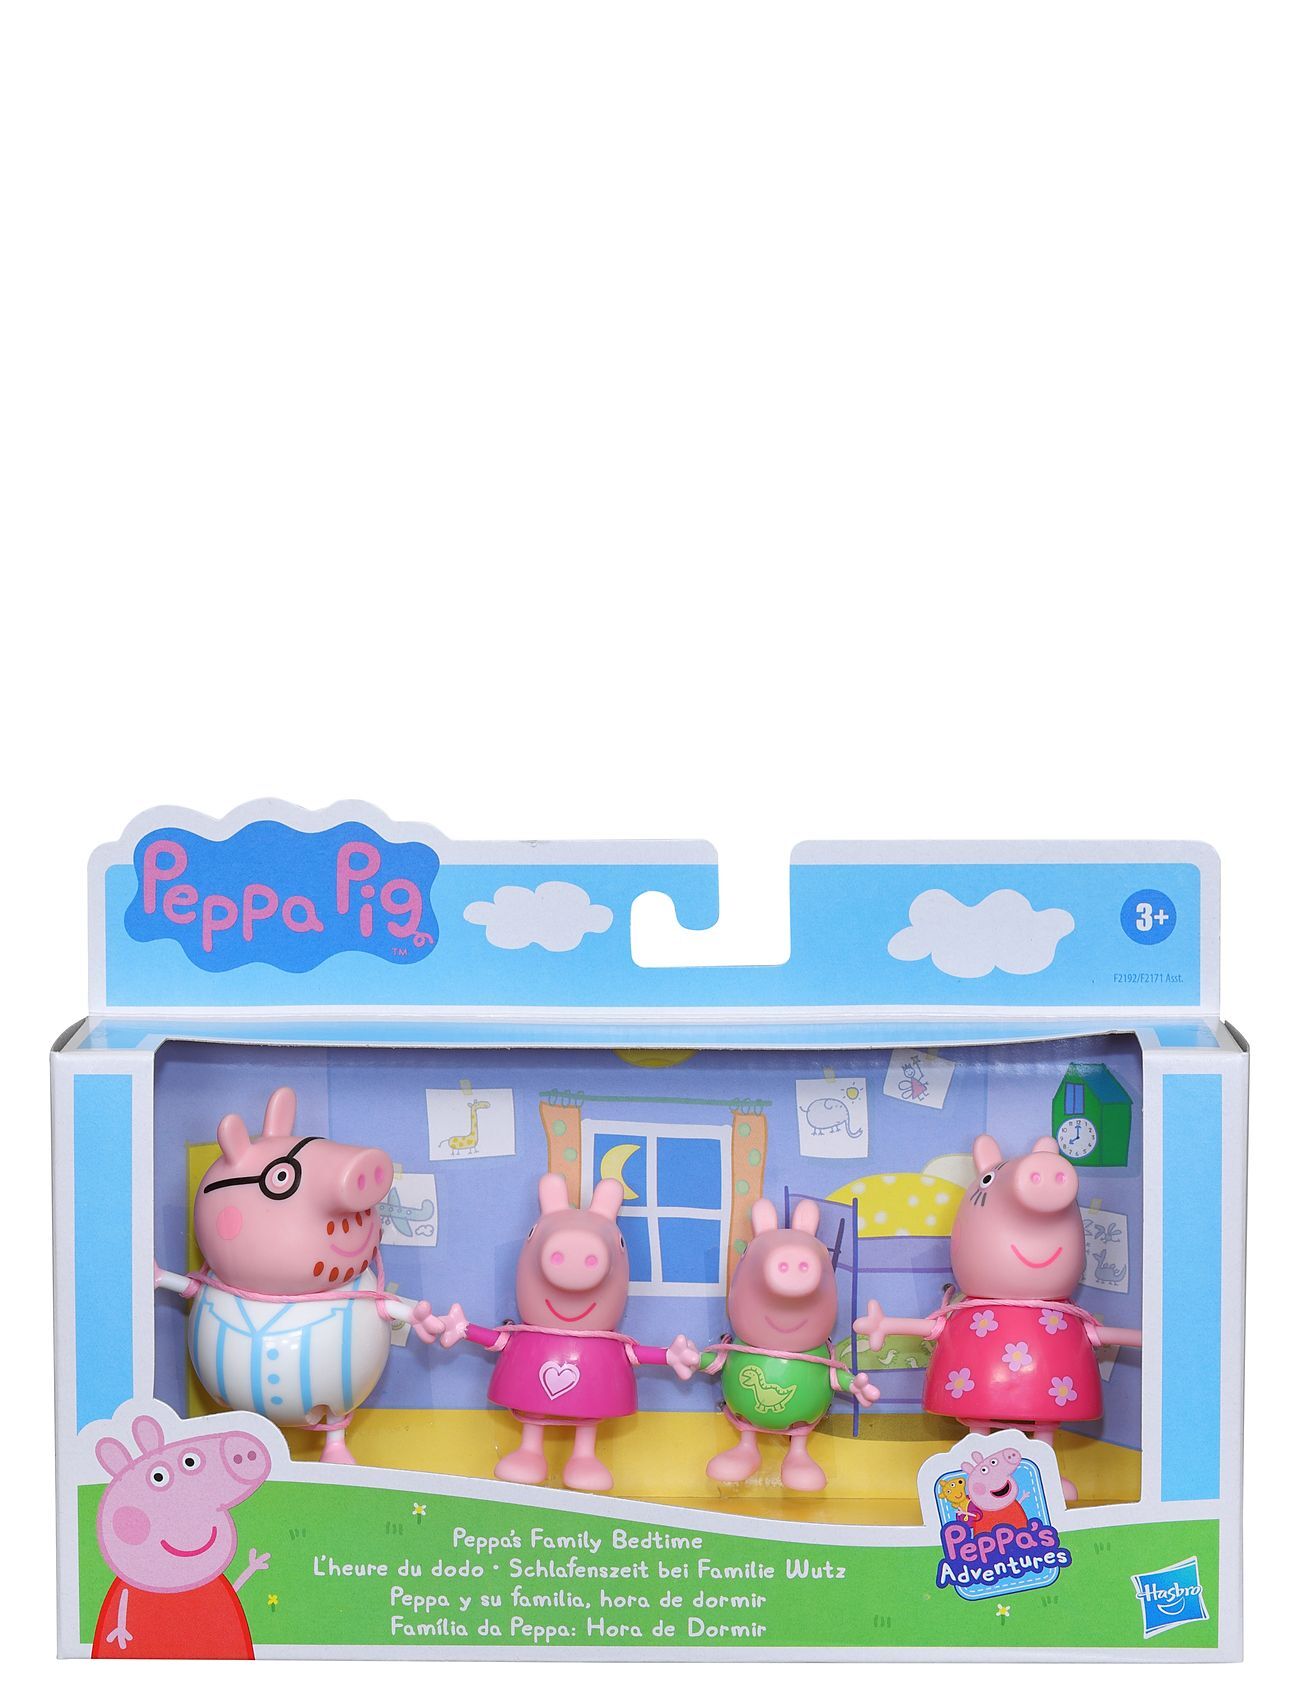 Peppa Pig Pep Peppas Family Bedtime Toys Playsets & Action Figures Multi/mønstret Peppa Pig